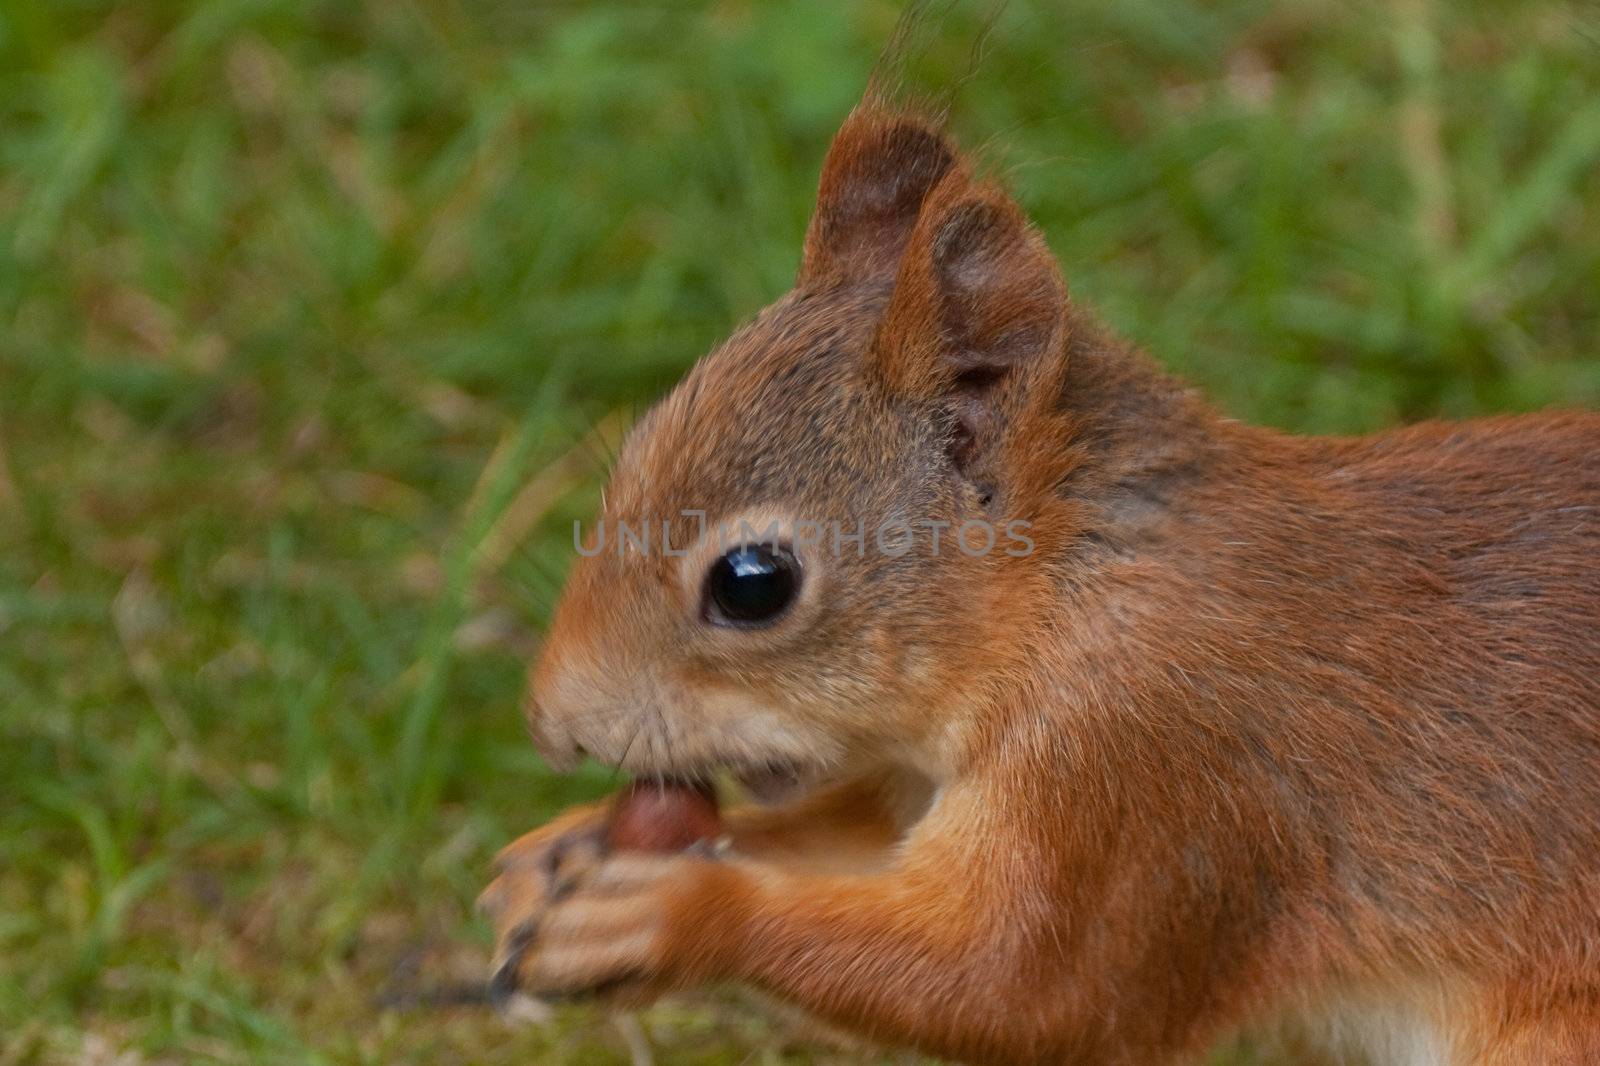 Squirrel eating..